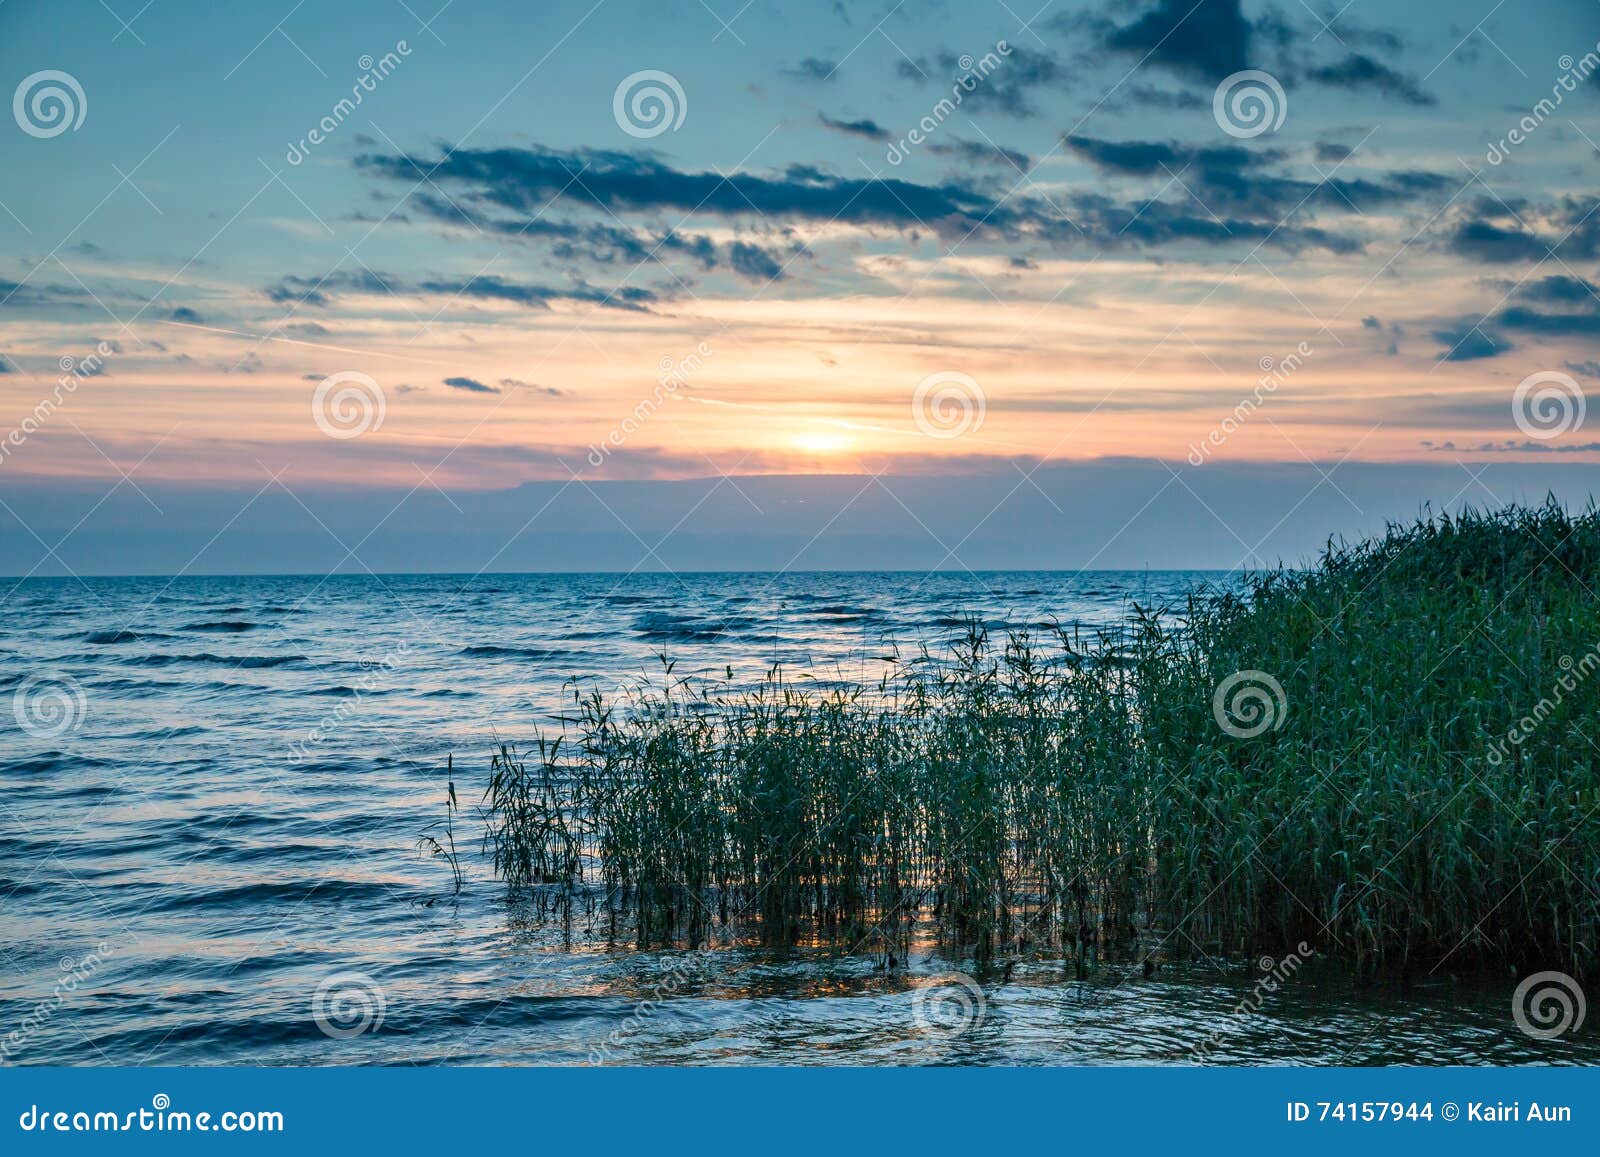 lake peipus at sunrise